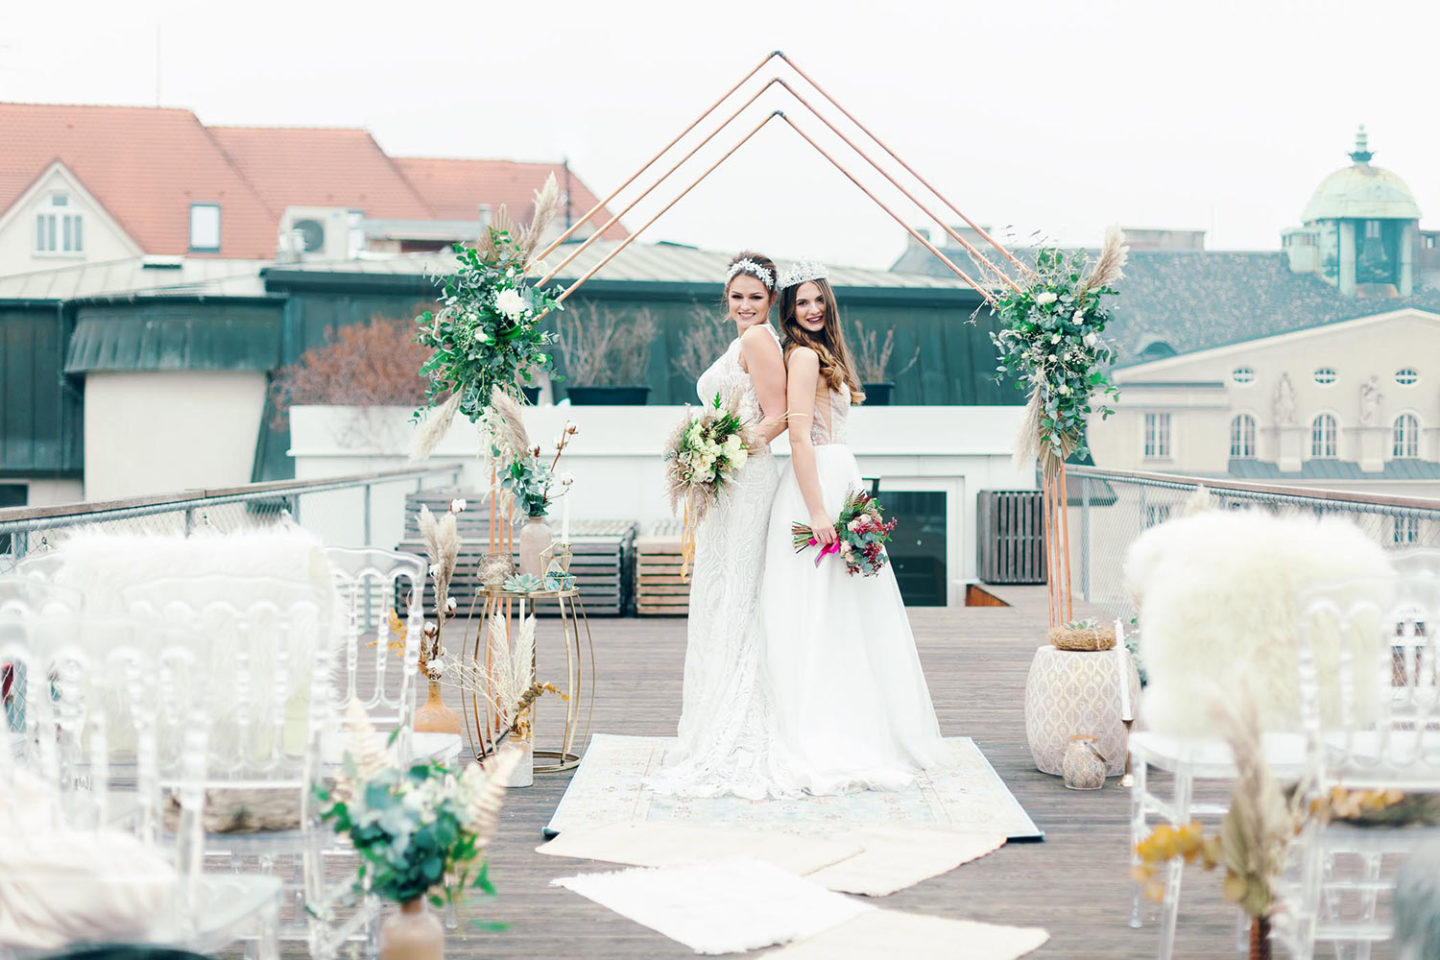 City Rooftop Elopement Wedding Inspiration in Bazaar, Czech Republic